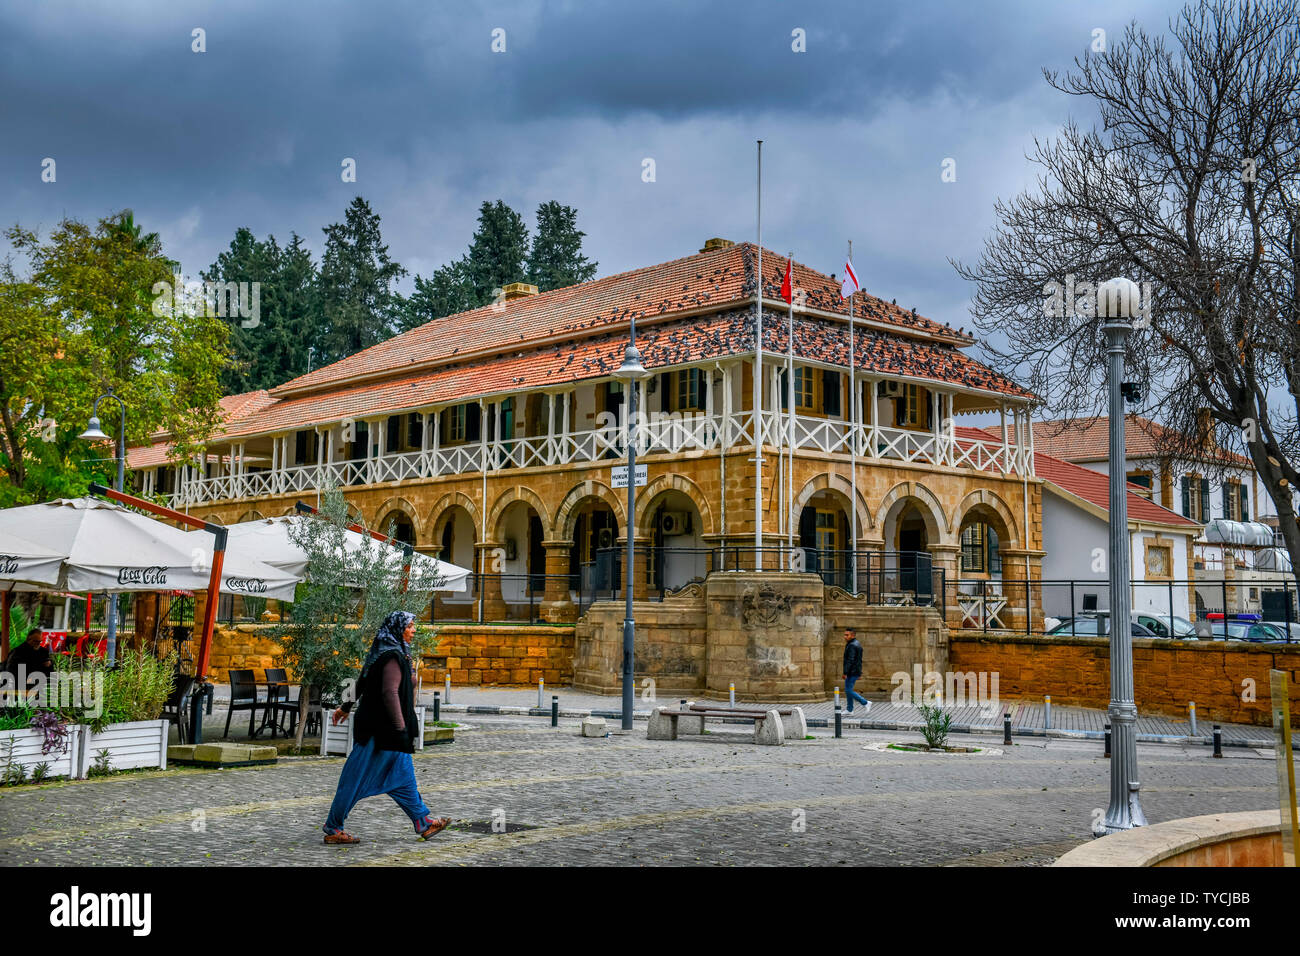 Gericht Hukuk Dairesi, Nikosia, Tuerkische Republik Nordzypern Foto Stock